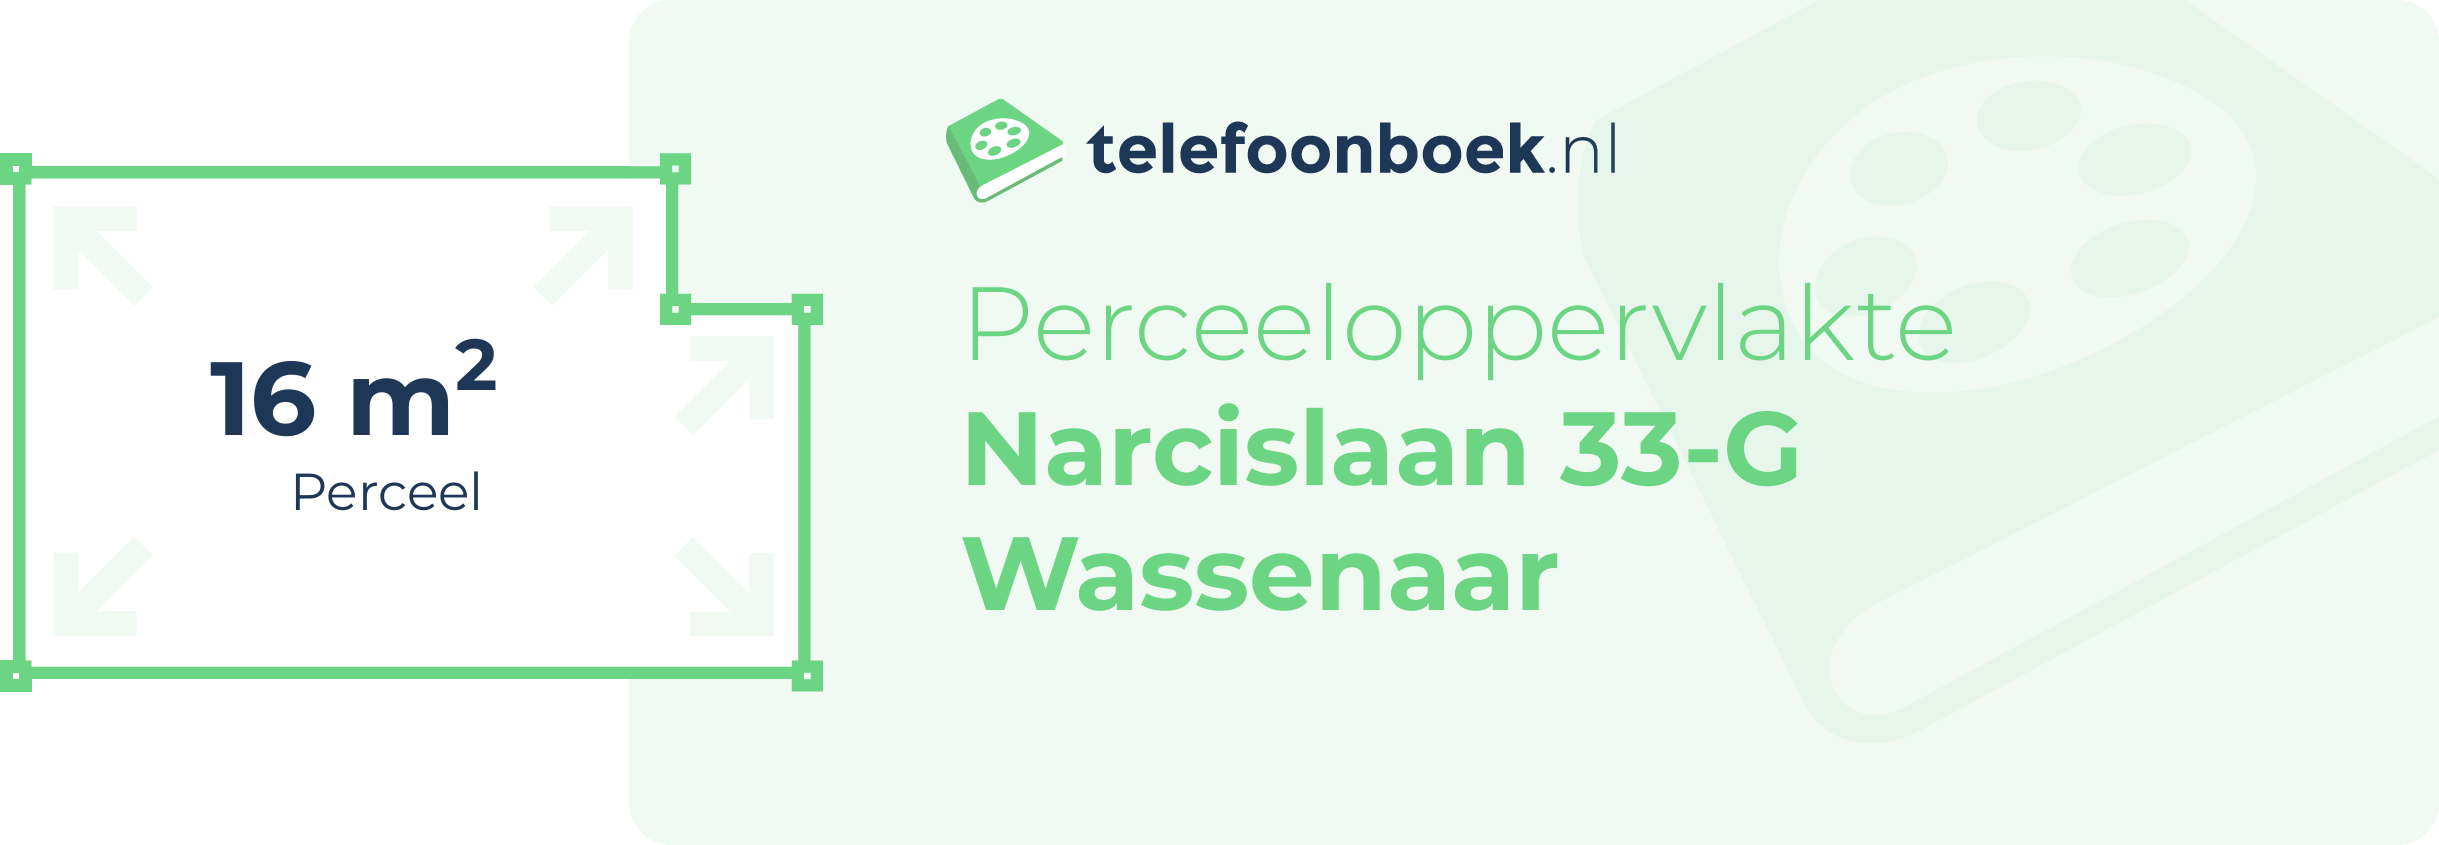 Perceeloppervlakte Narcislaan 33-G Wassenaar